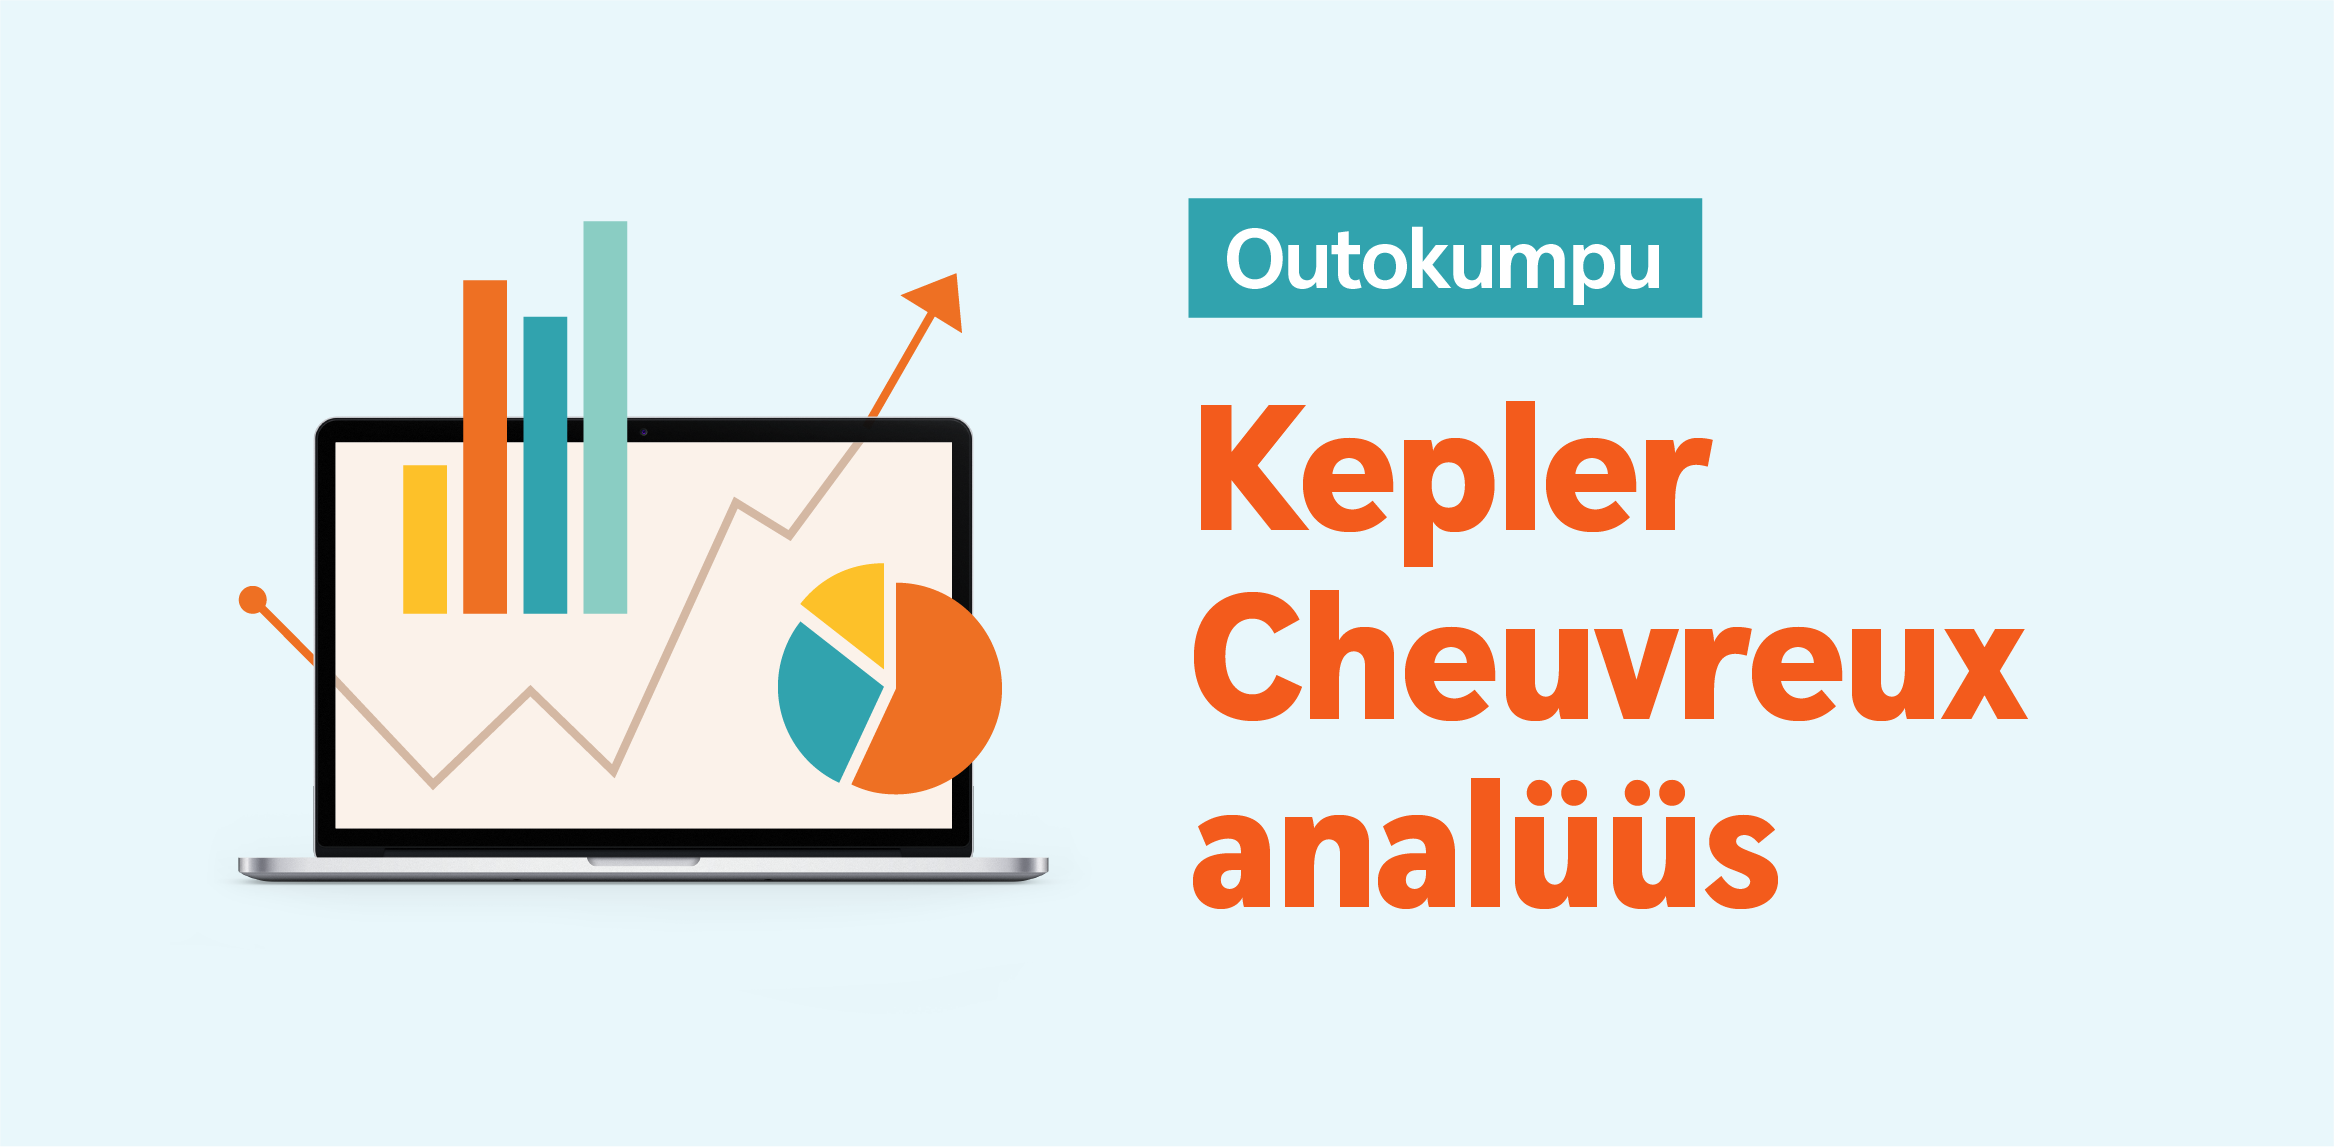 Kepler Cheuvreux повысил целевую цену акций Outokumpu